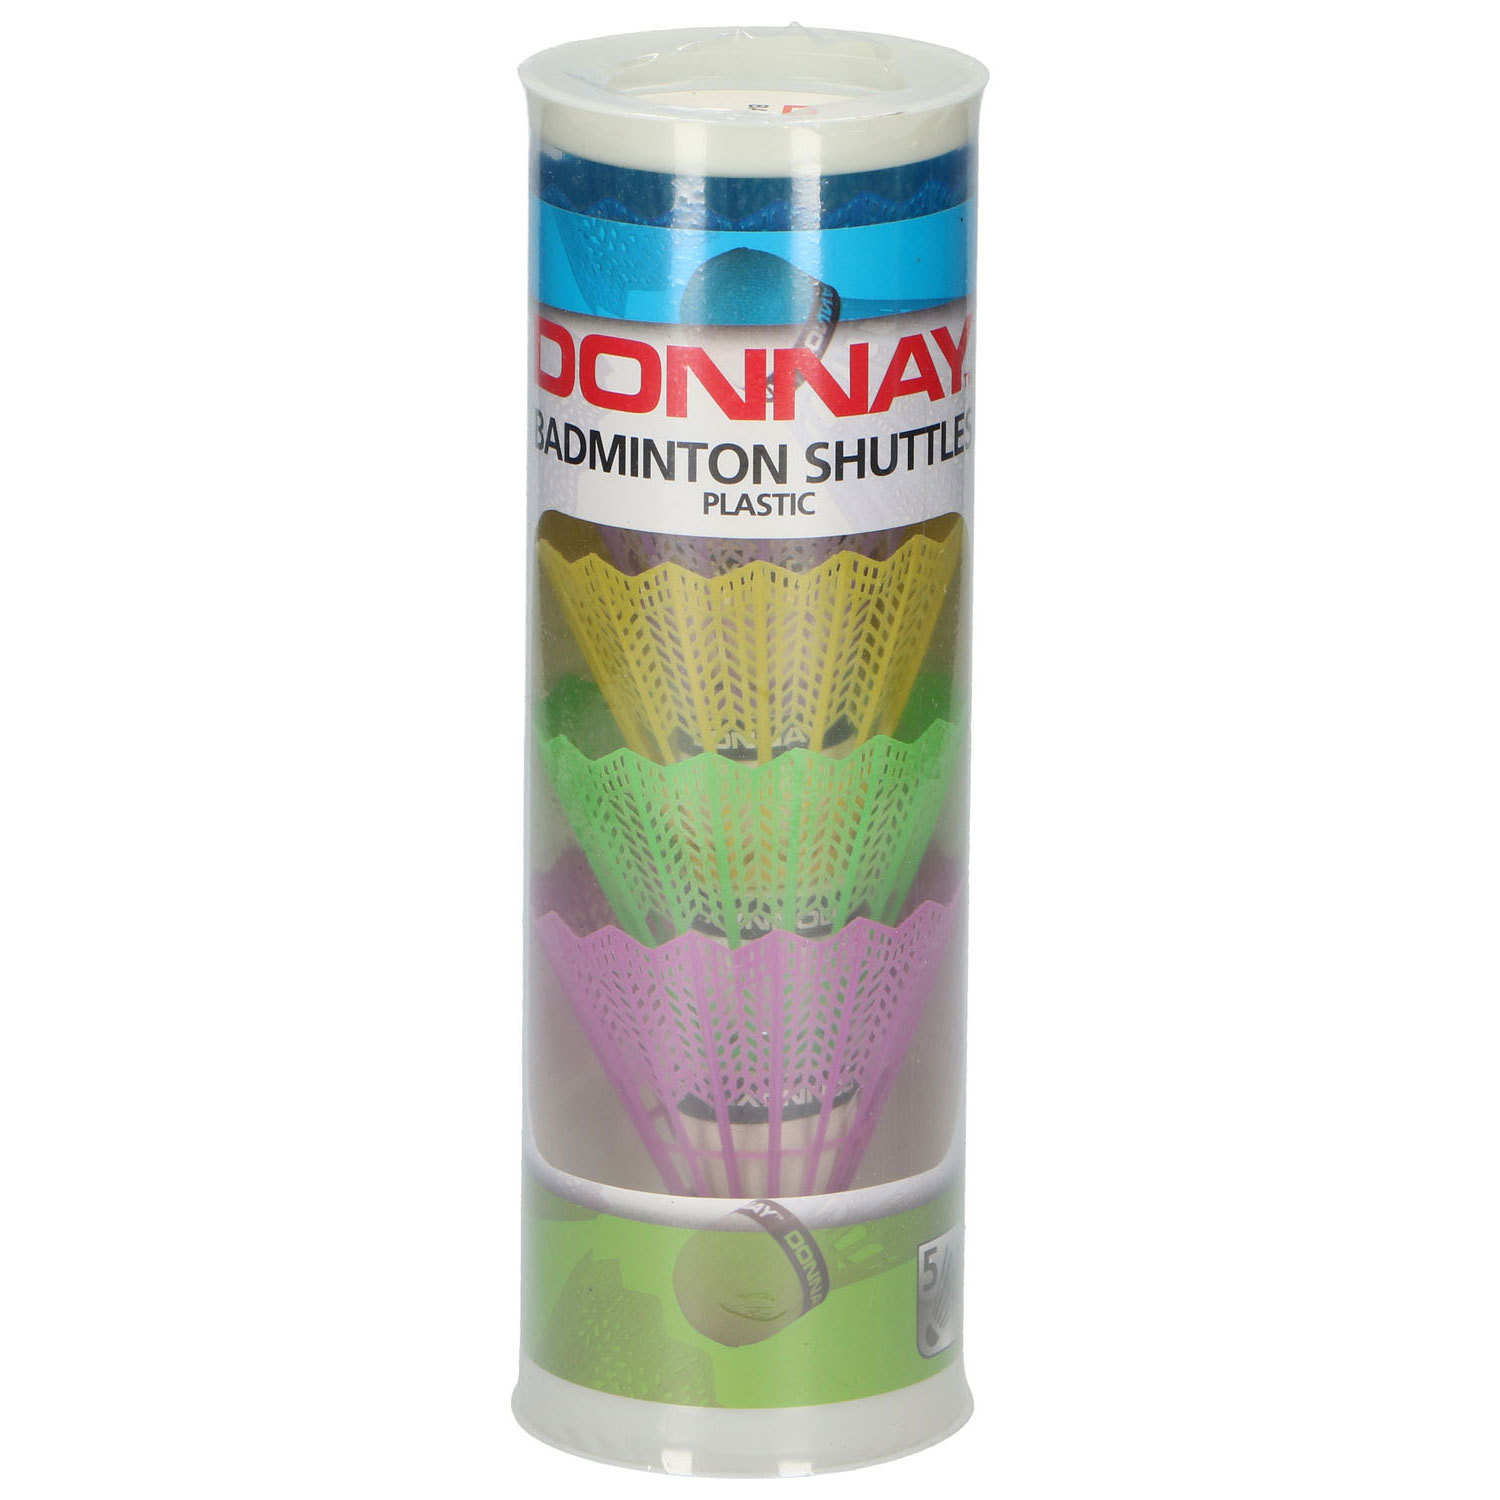 Donnay Badminton Shuttle, 5st.